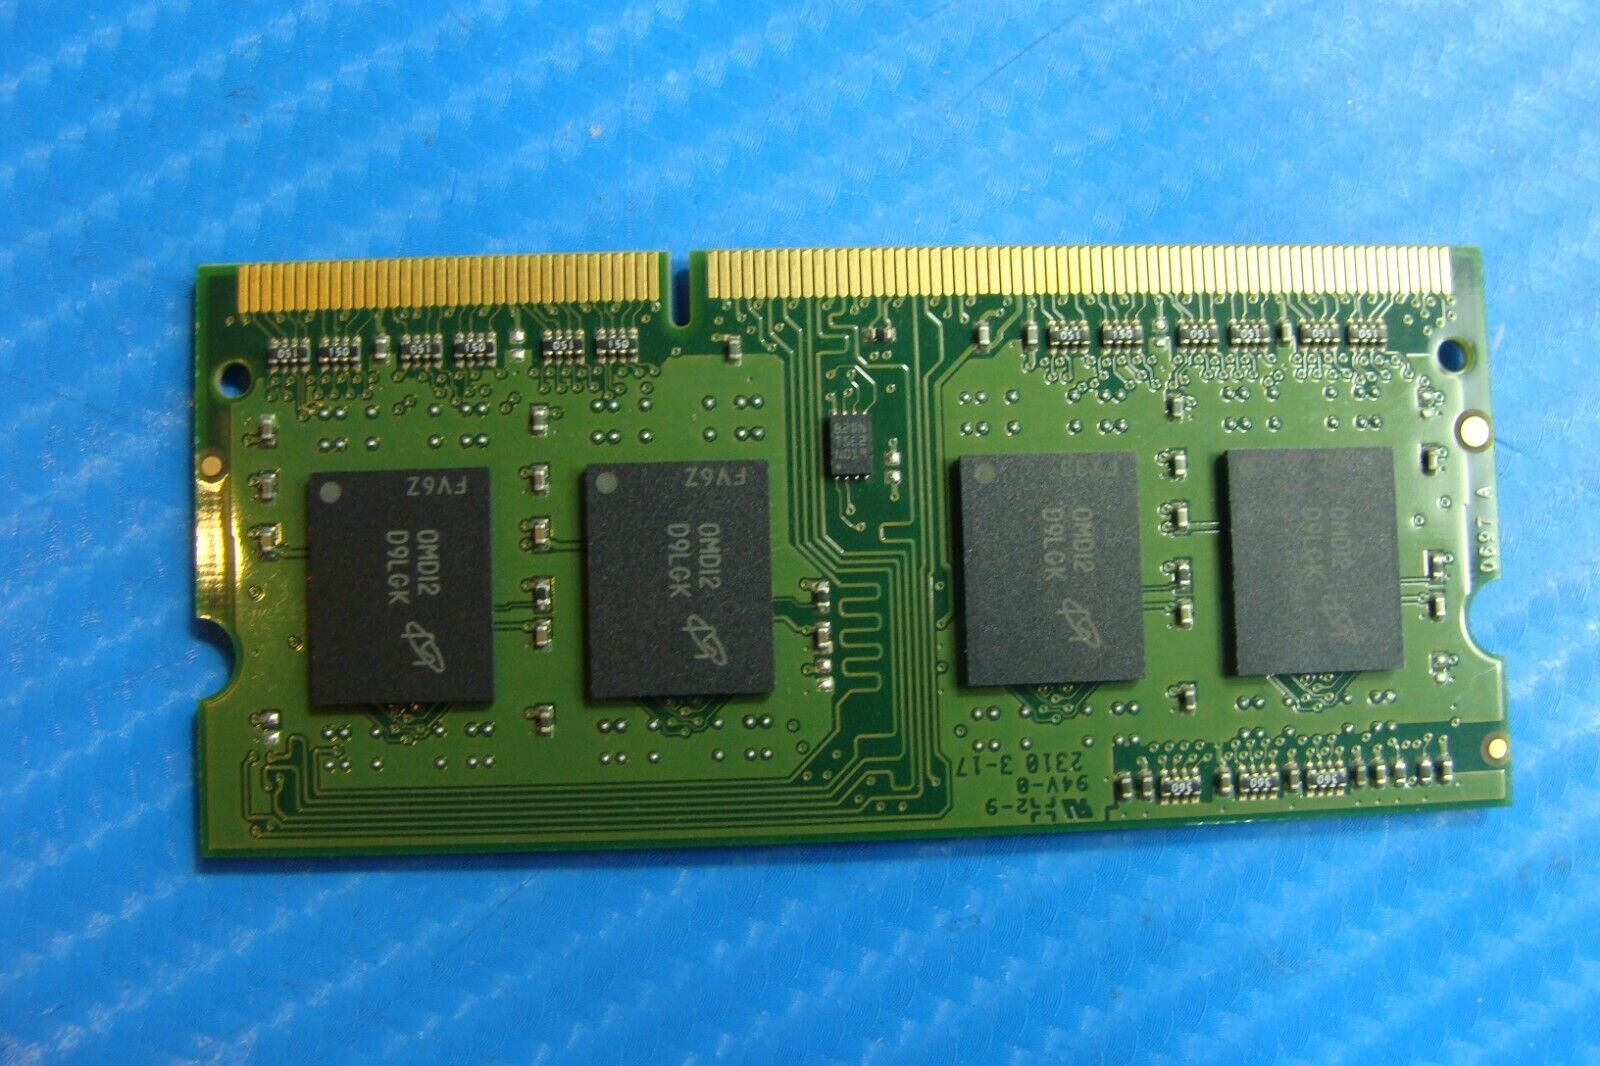 MacBook A1278 Micron 2GB Memory Ram So-Dimm pc3-8500s mt8jsf25664hz-1g1d1 - Laptop Parts - Buy Authentic Computer Parts - Top Seller Ebay